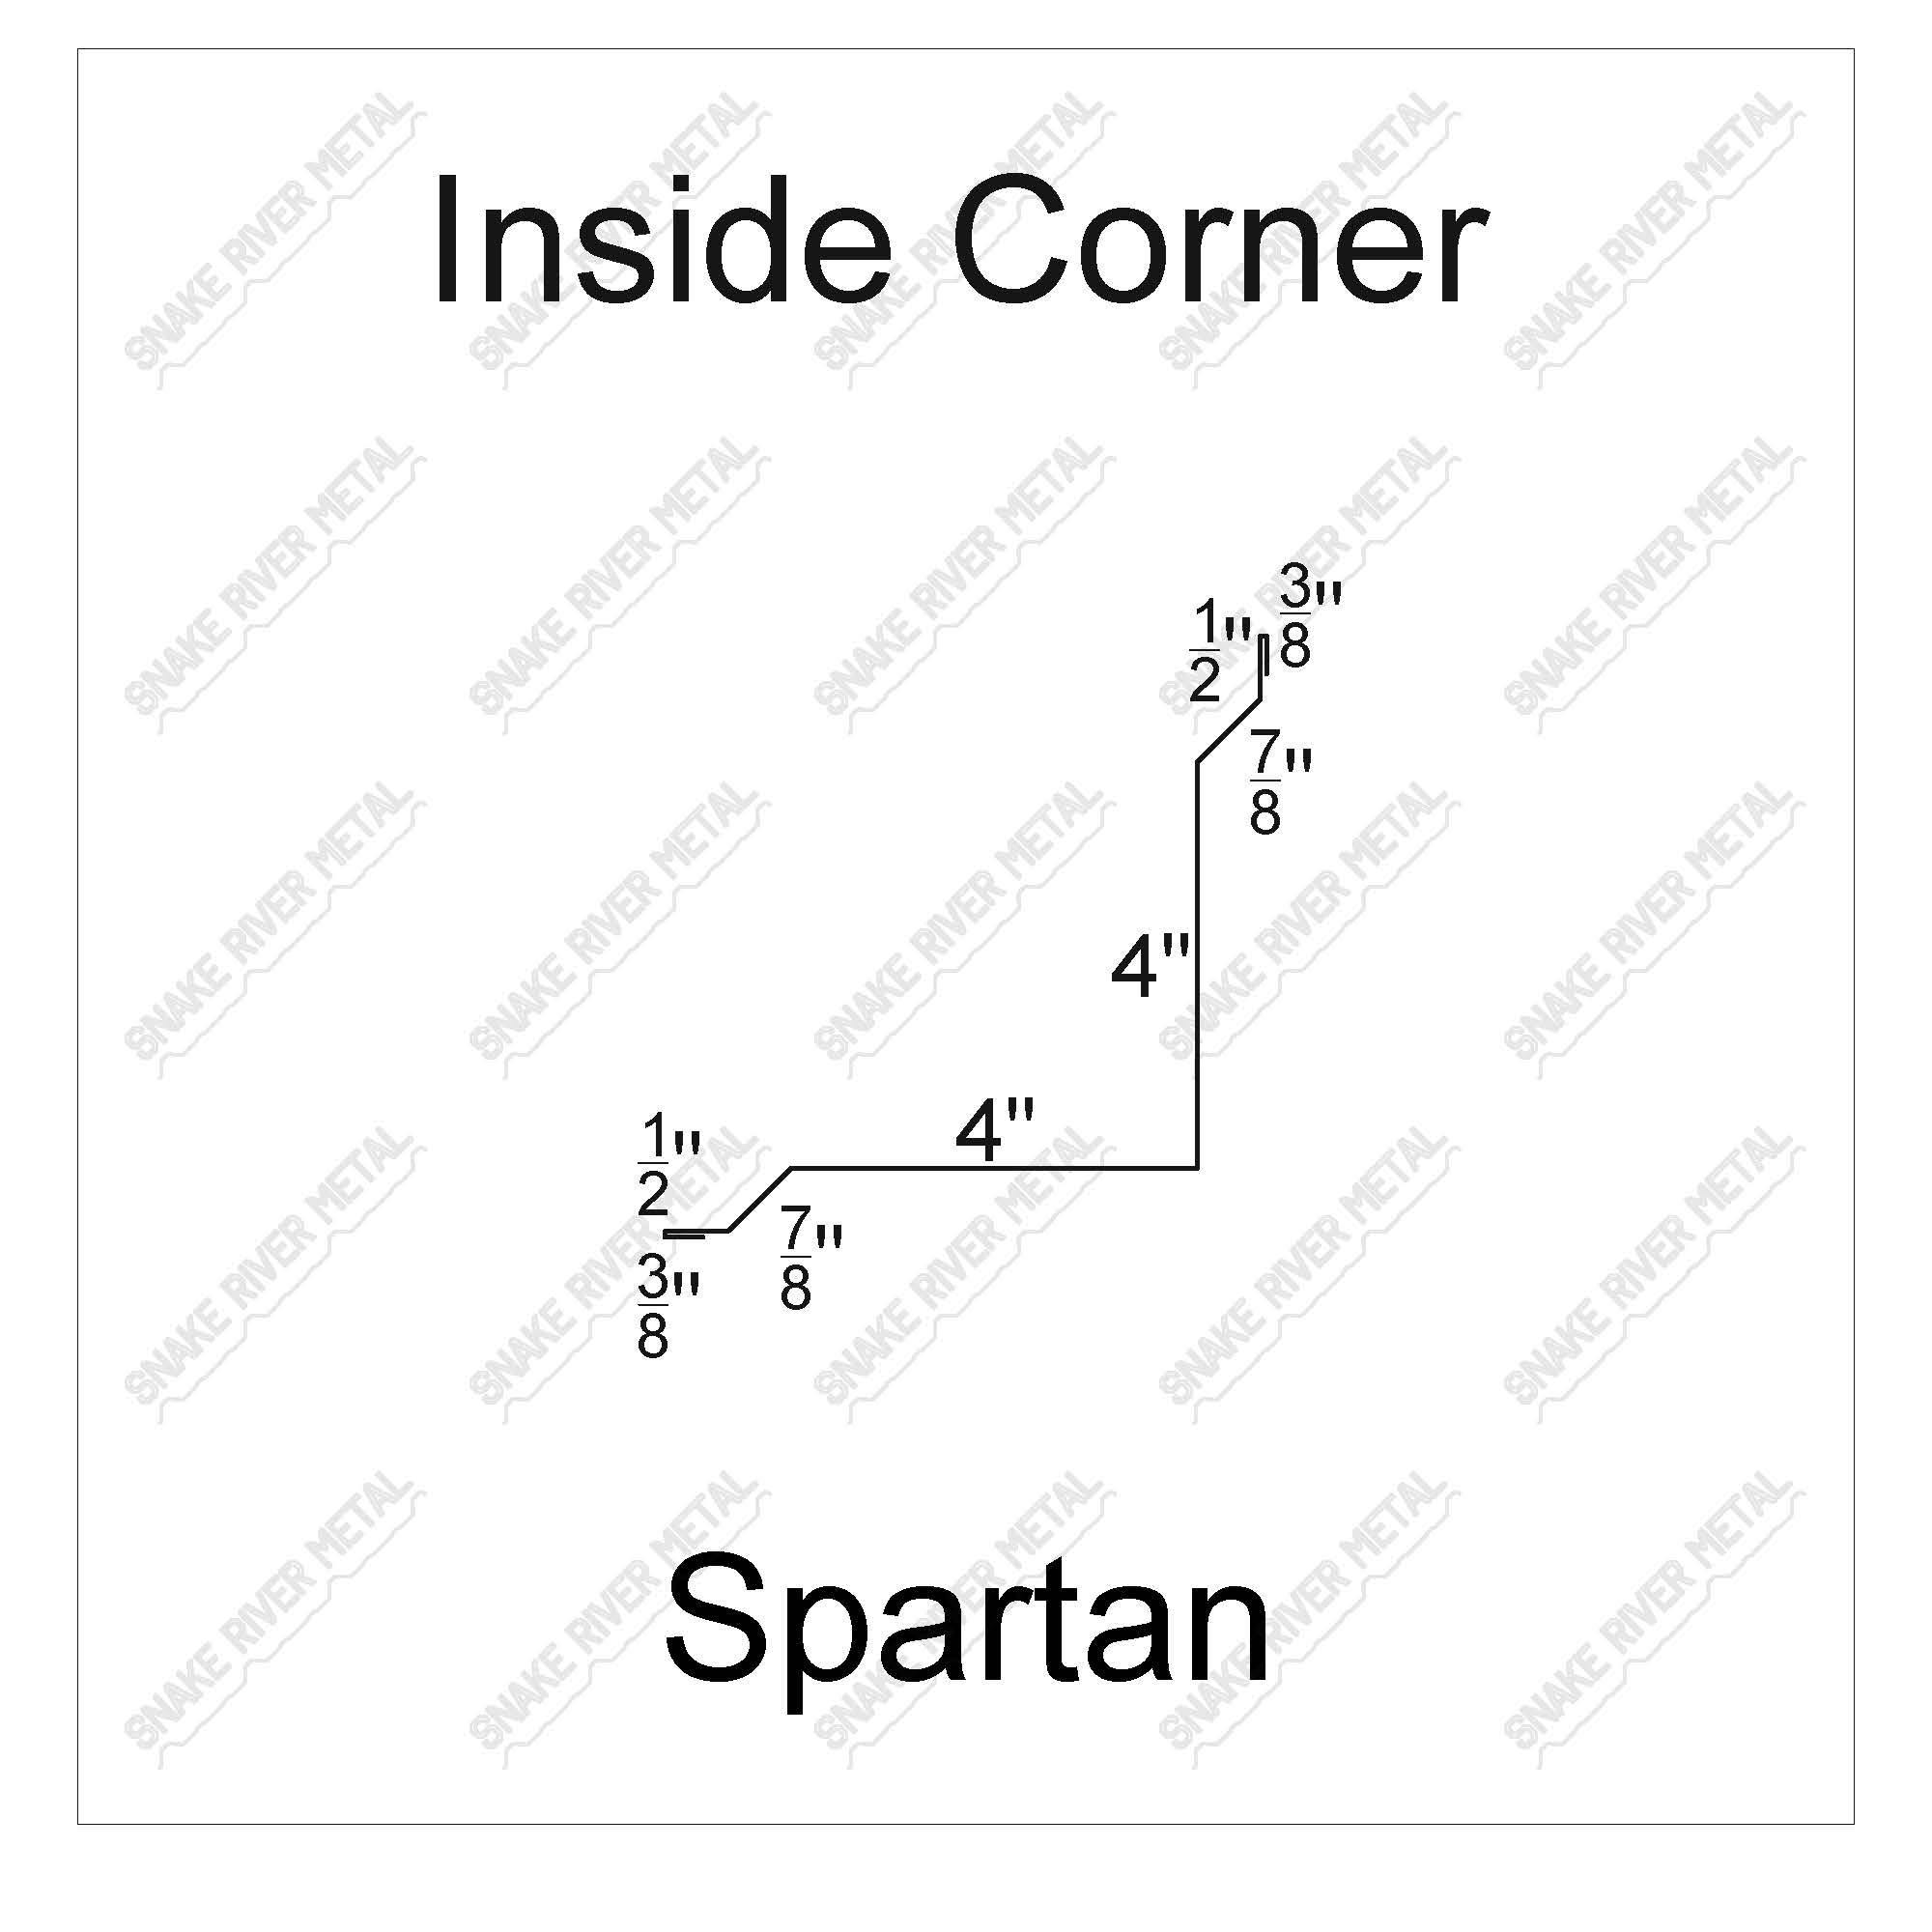 Inside Corner - SpartanTrim